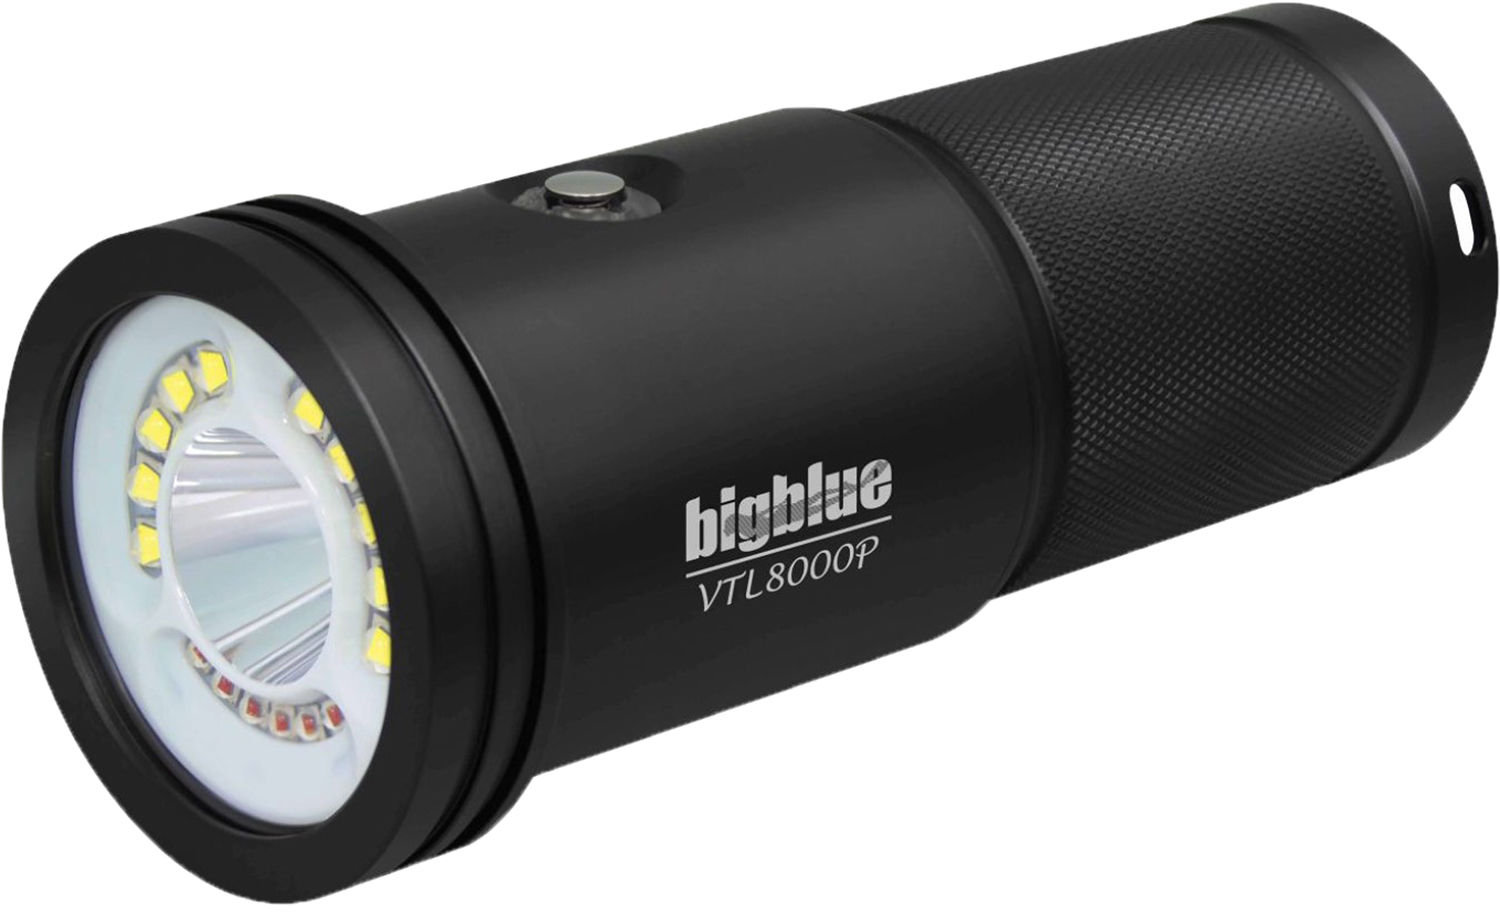 Bigblue VTL8000P Video/Tech Combo Light